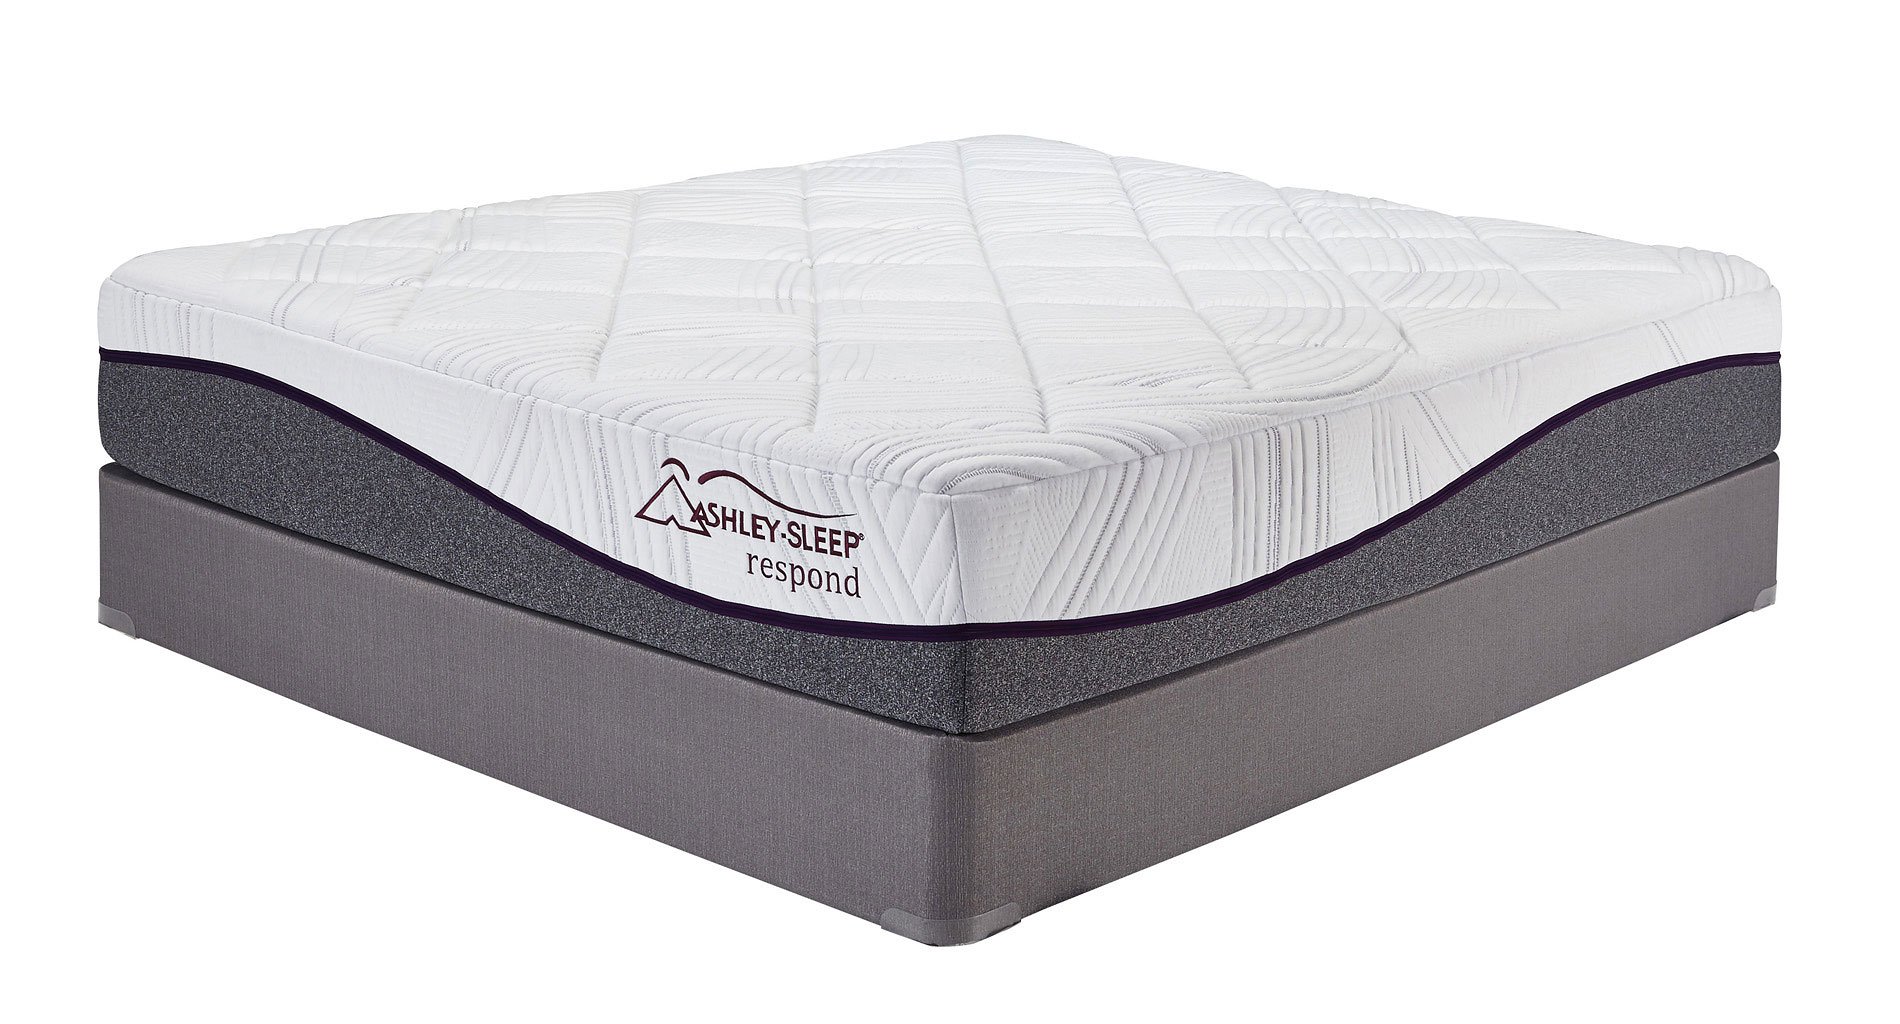 ashley chime 12 inch memory foam mattress review